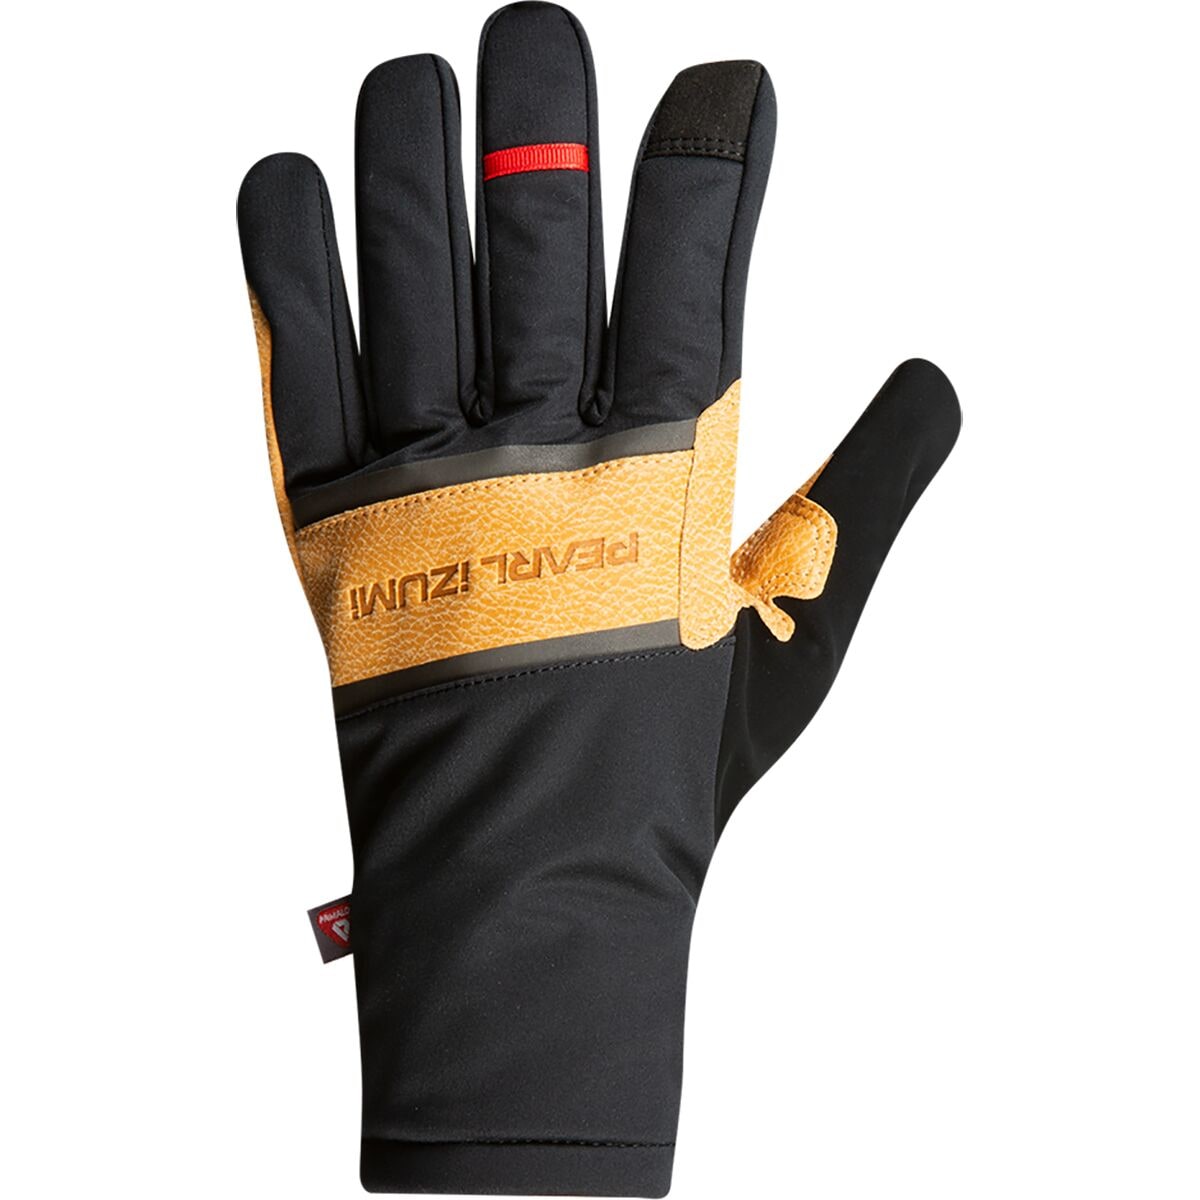 PEARL iZUMi AmFib Lite Glove - Men's